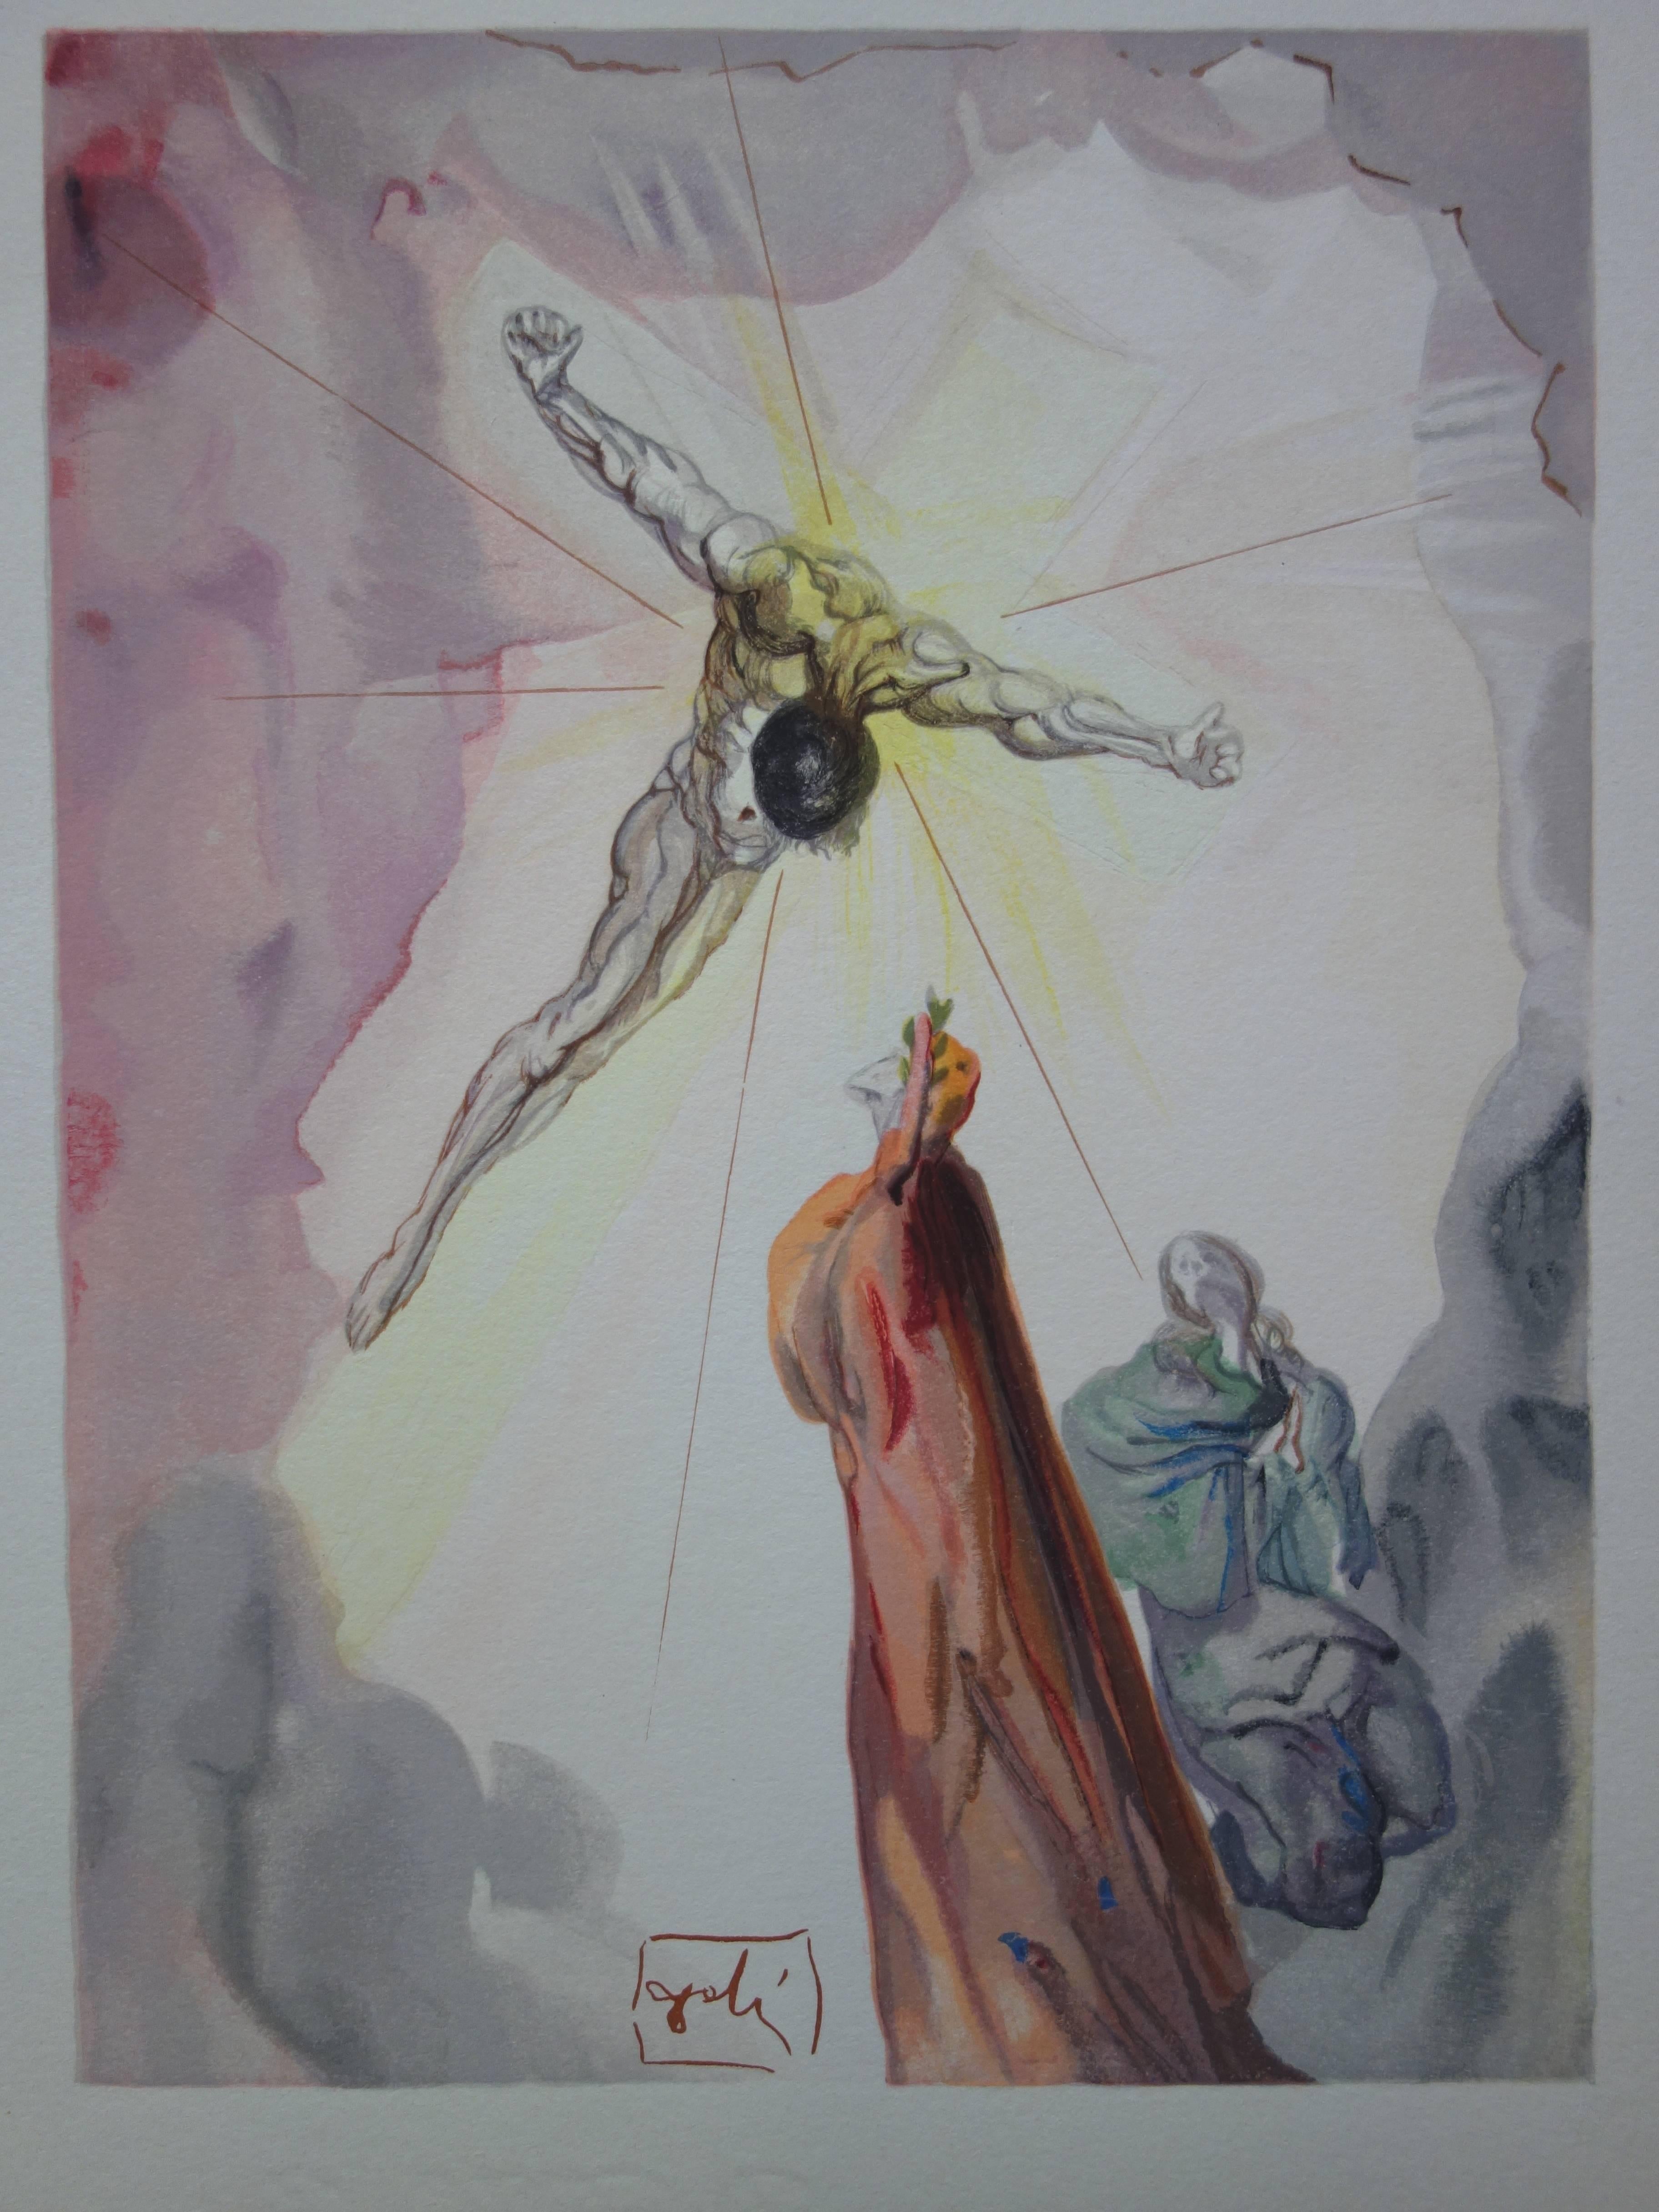 Heaven 14 - The Apparition of Christ - Original woodcut - 1963 - Surrealist Print by Salvador Dalí